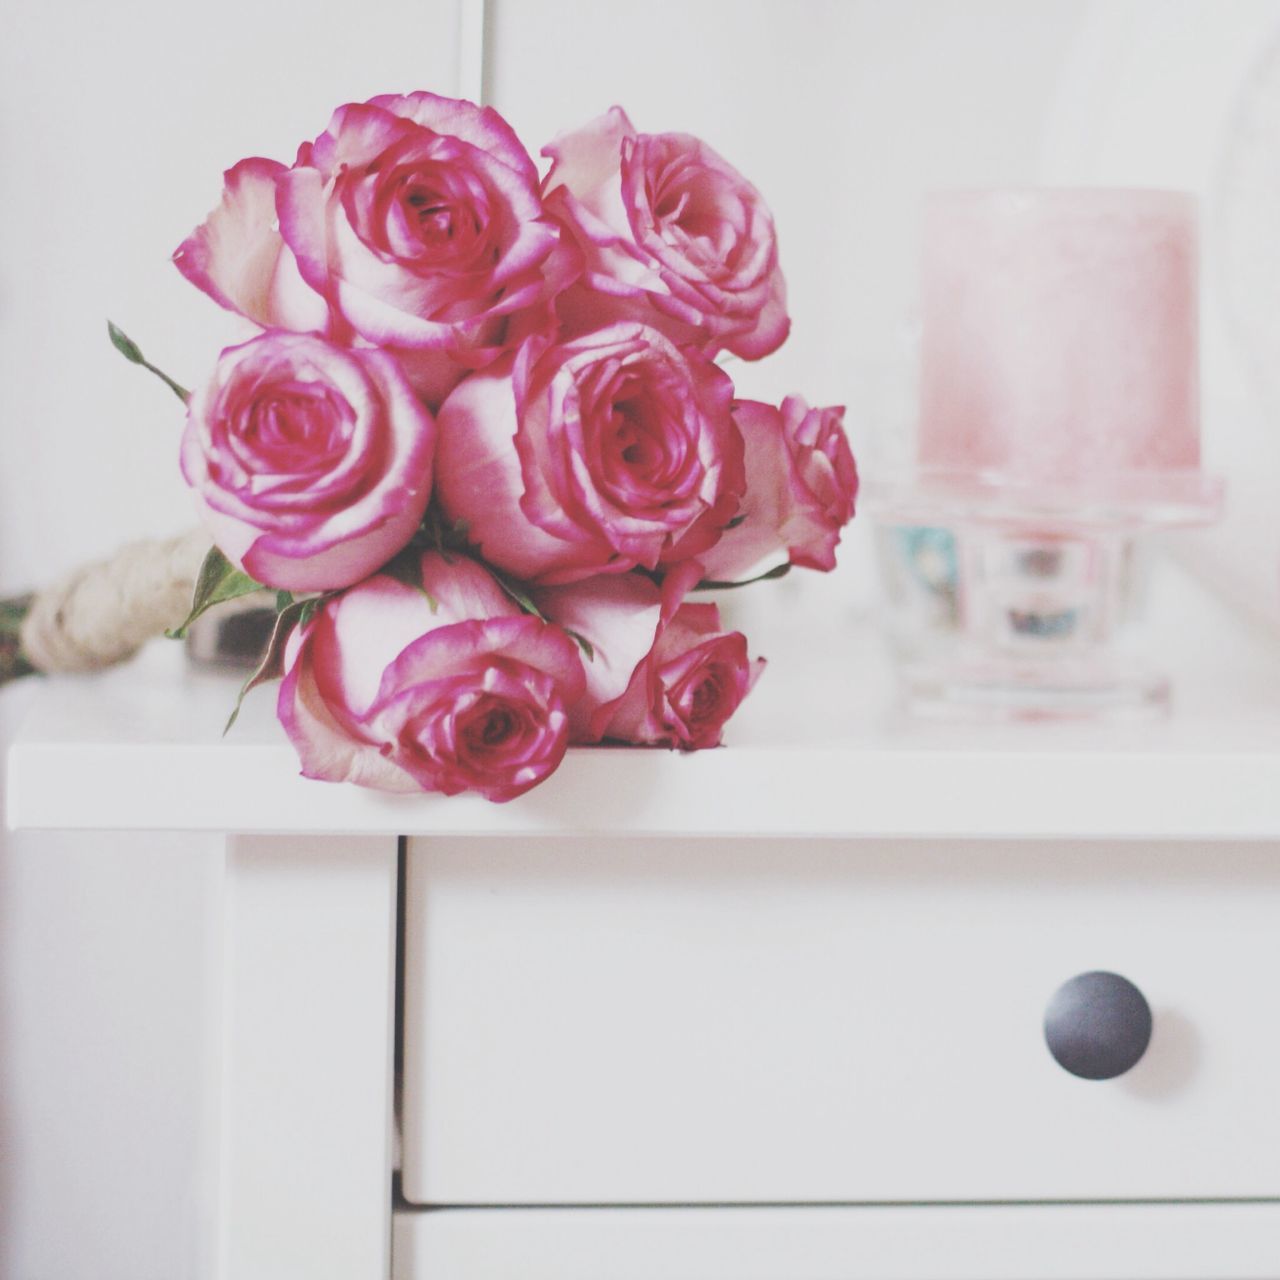 indoors, flower, vase, red, table, rose - flower, pink color, freshness, home interior, still life, close-up, petal, fragility, decoration, rose, flower head, wall - building feature, no people, pink, flower arrangement